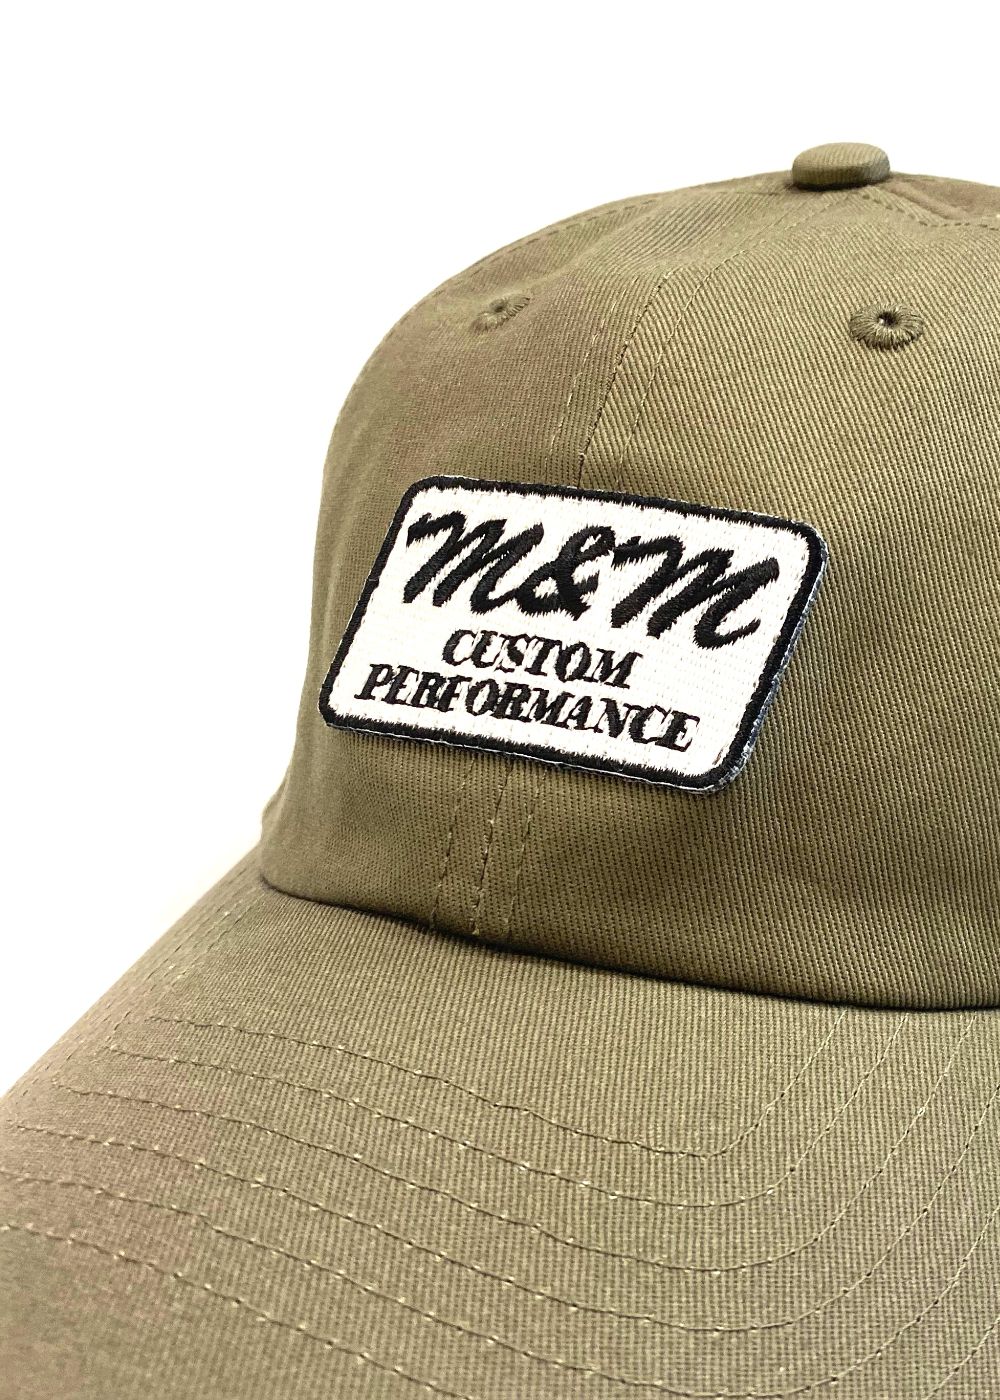 M&M CUSTOM PERFORMANCE - COTTON TWILL LOW CAP (OLIVE) / ワッペン 